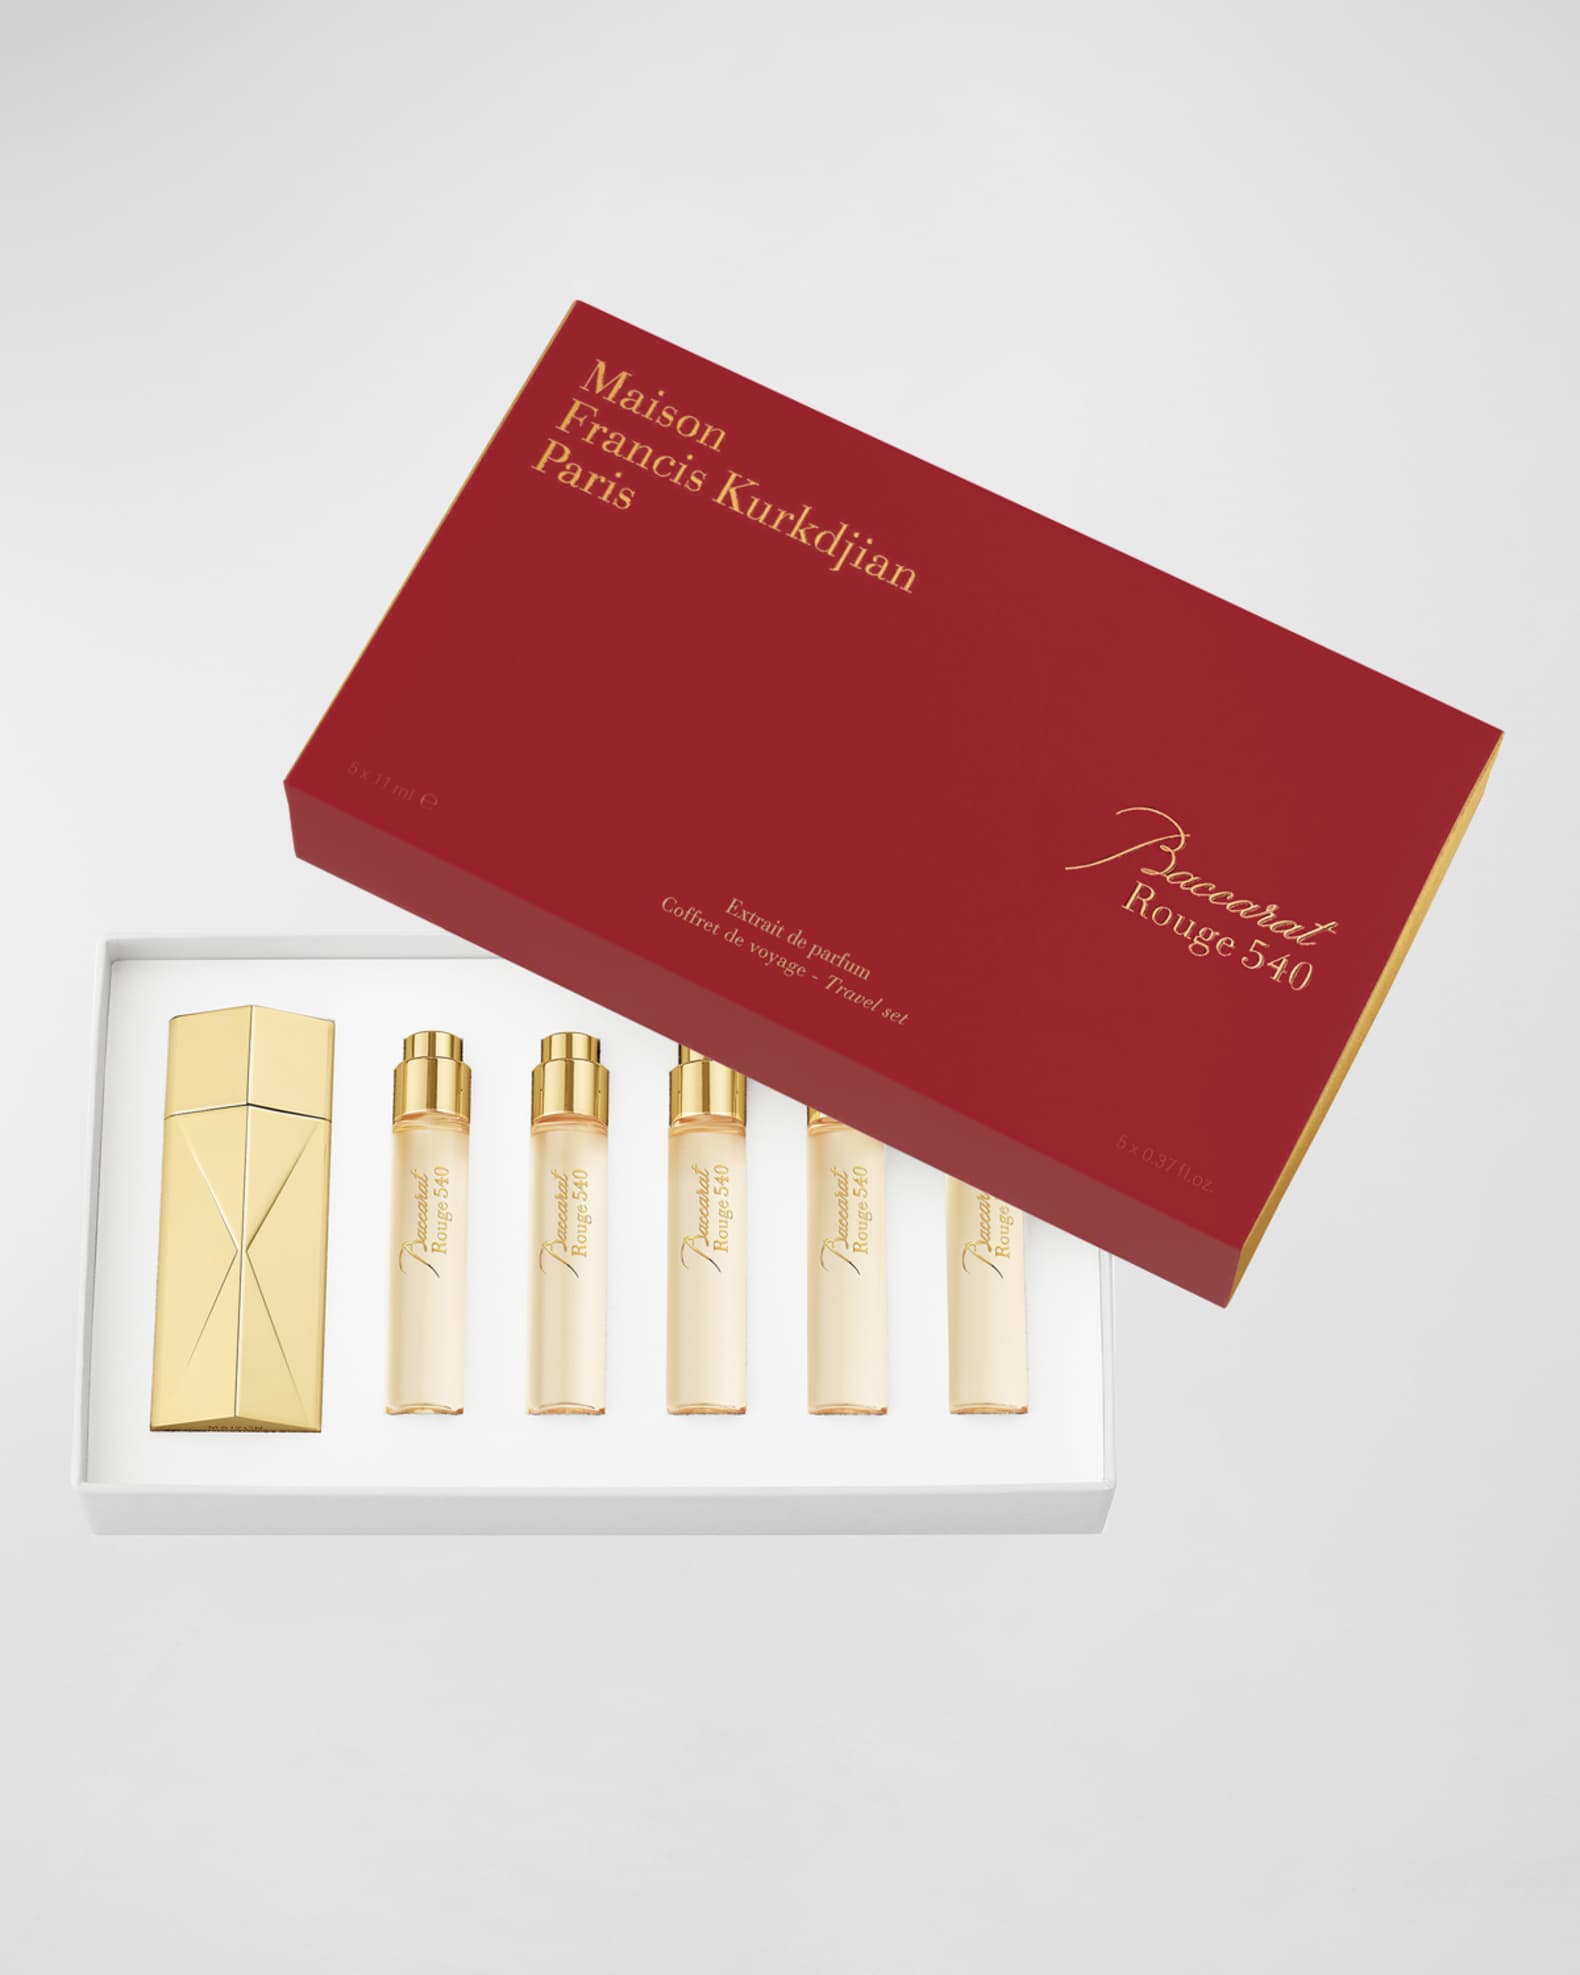 LOUIS VUITTON 8 Perfume samples GIFT SET in LV gift BOX Travel spray  bottles NEW